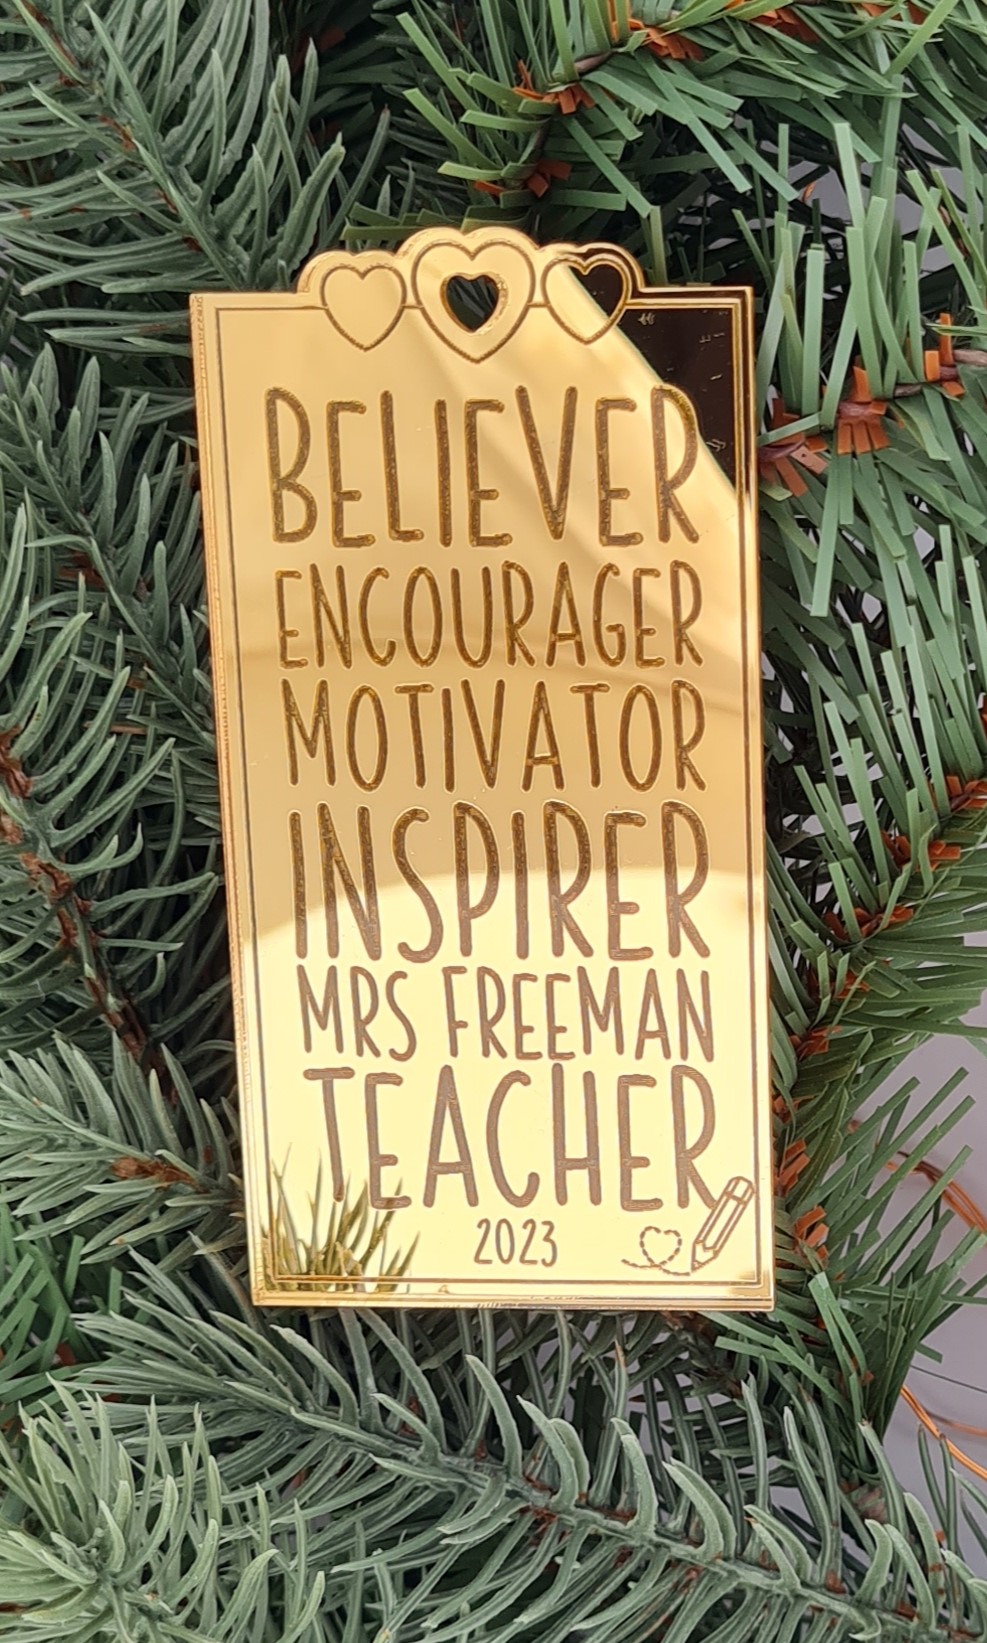 Teacher Inspirer Ornament